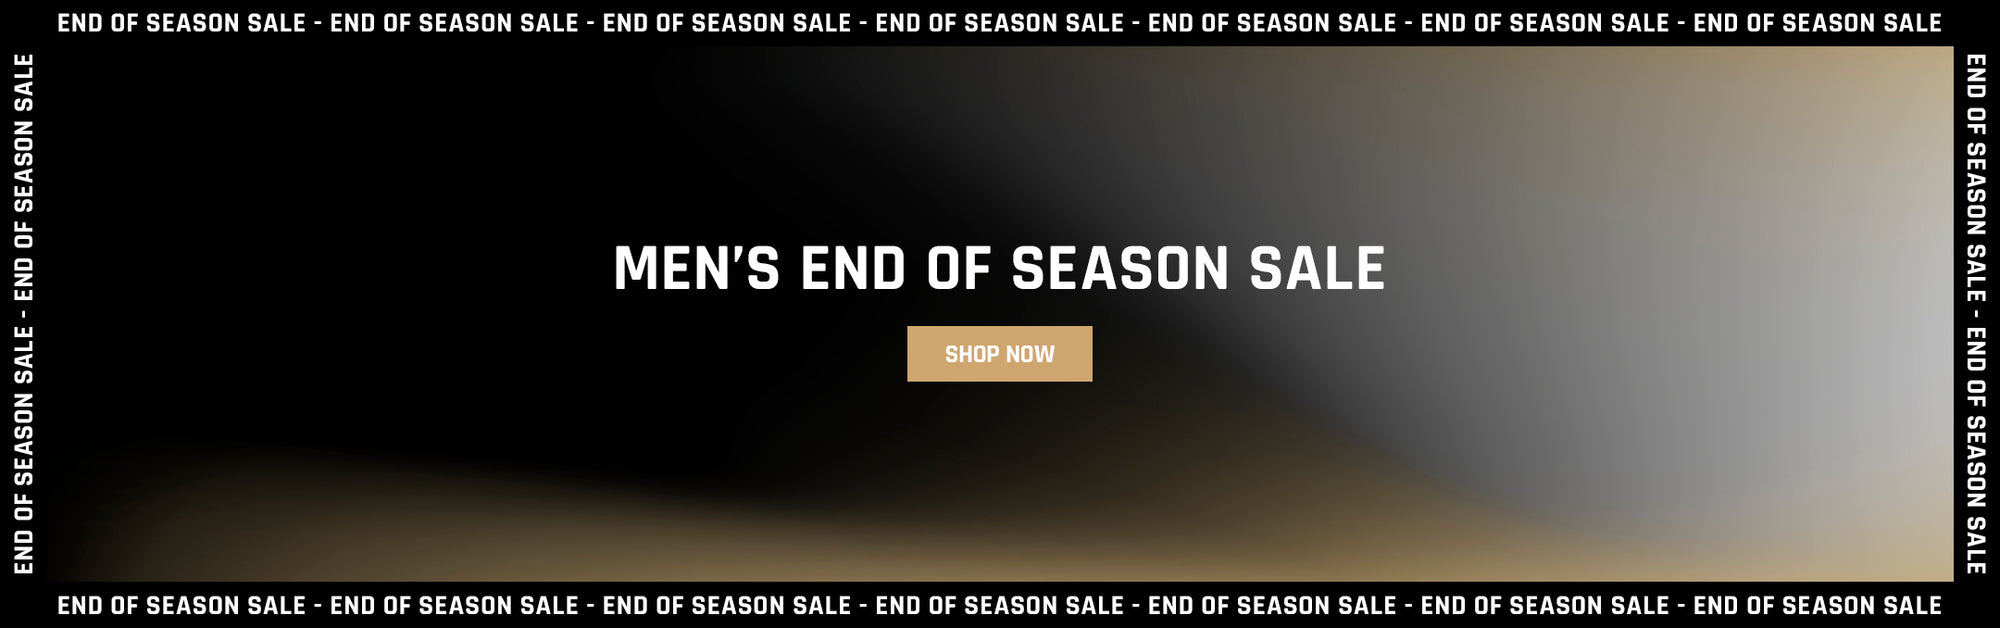 Men's End of Season Sale